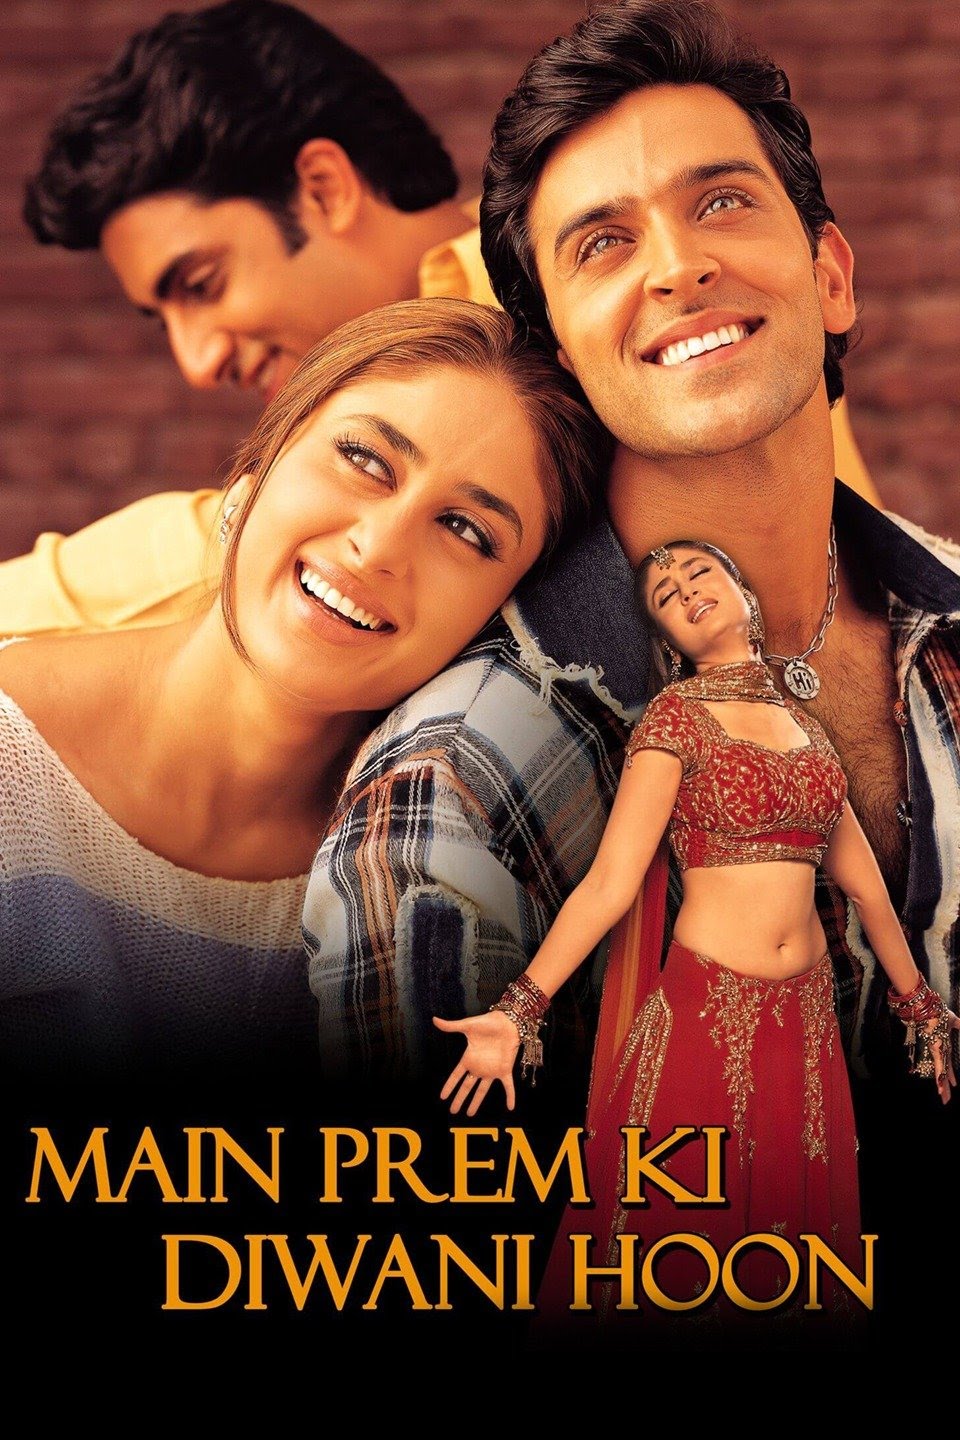 Main Prem Ki Diwani Hoon (2003) Hindi Movie 1080p 720p 480p HDRip ESub Free Download